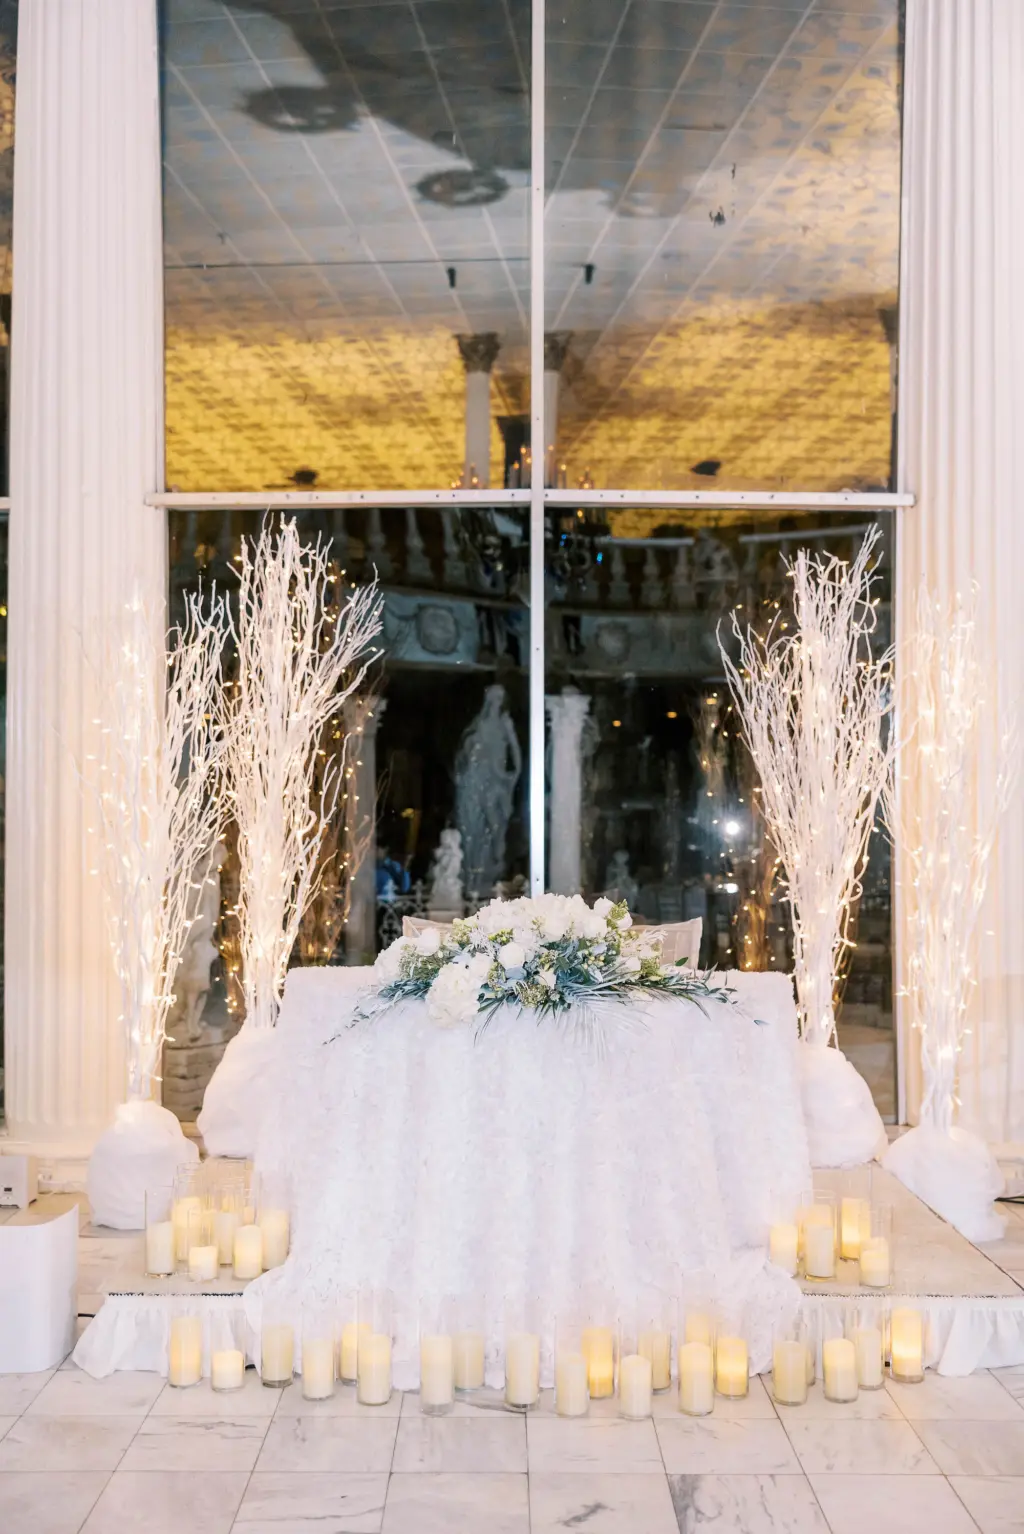 Candlelit Sweetheart Table with White Birchwood Tree Decor for Wedding Reception